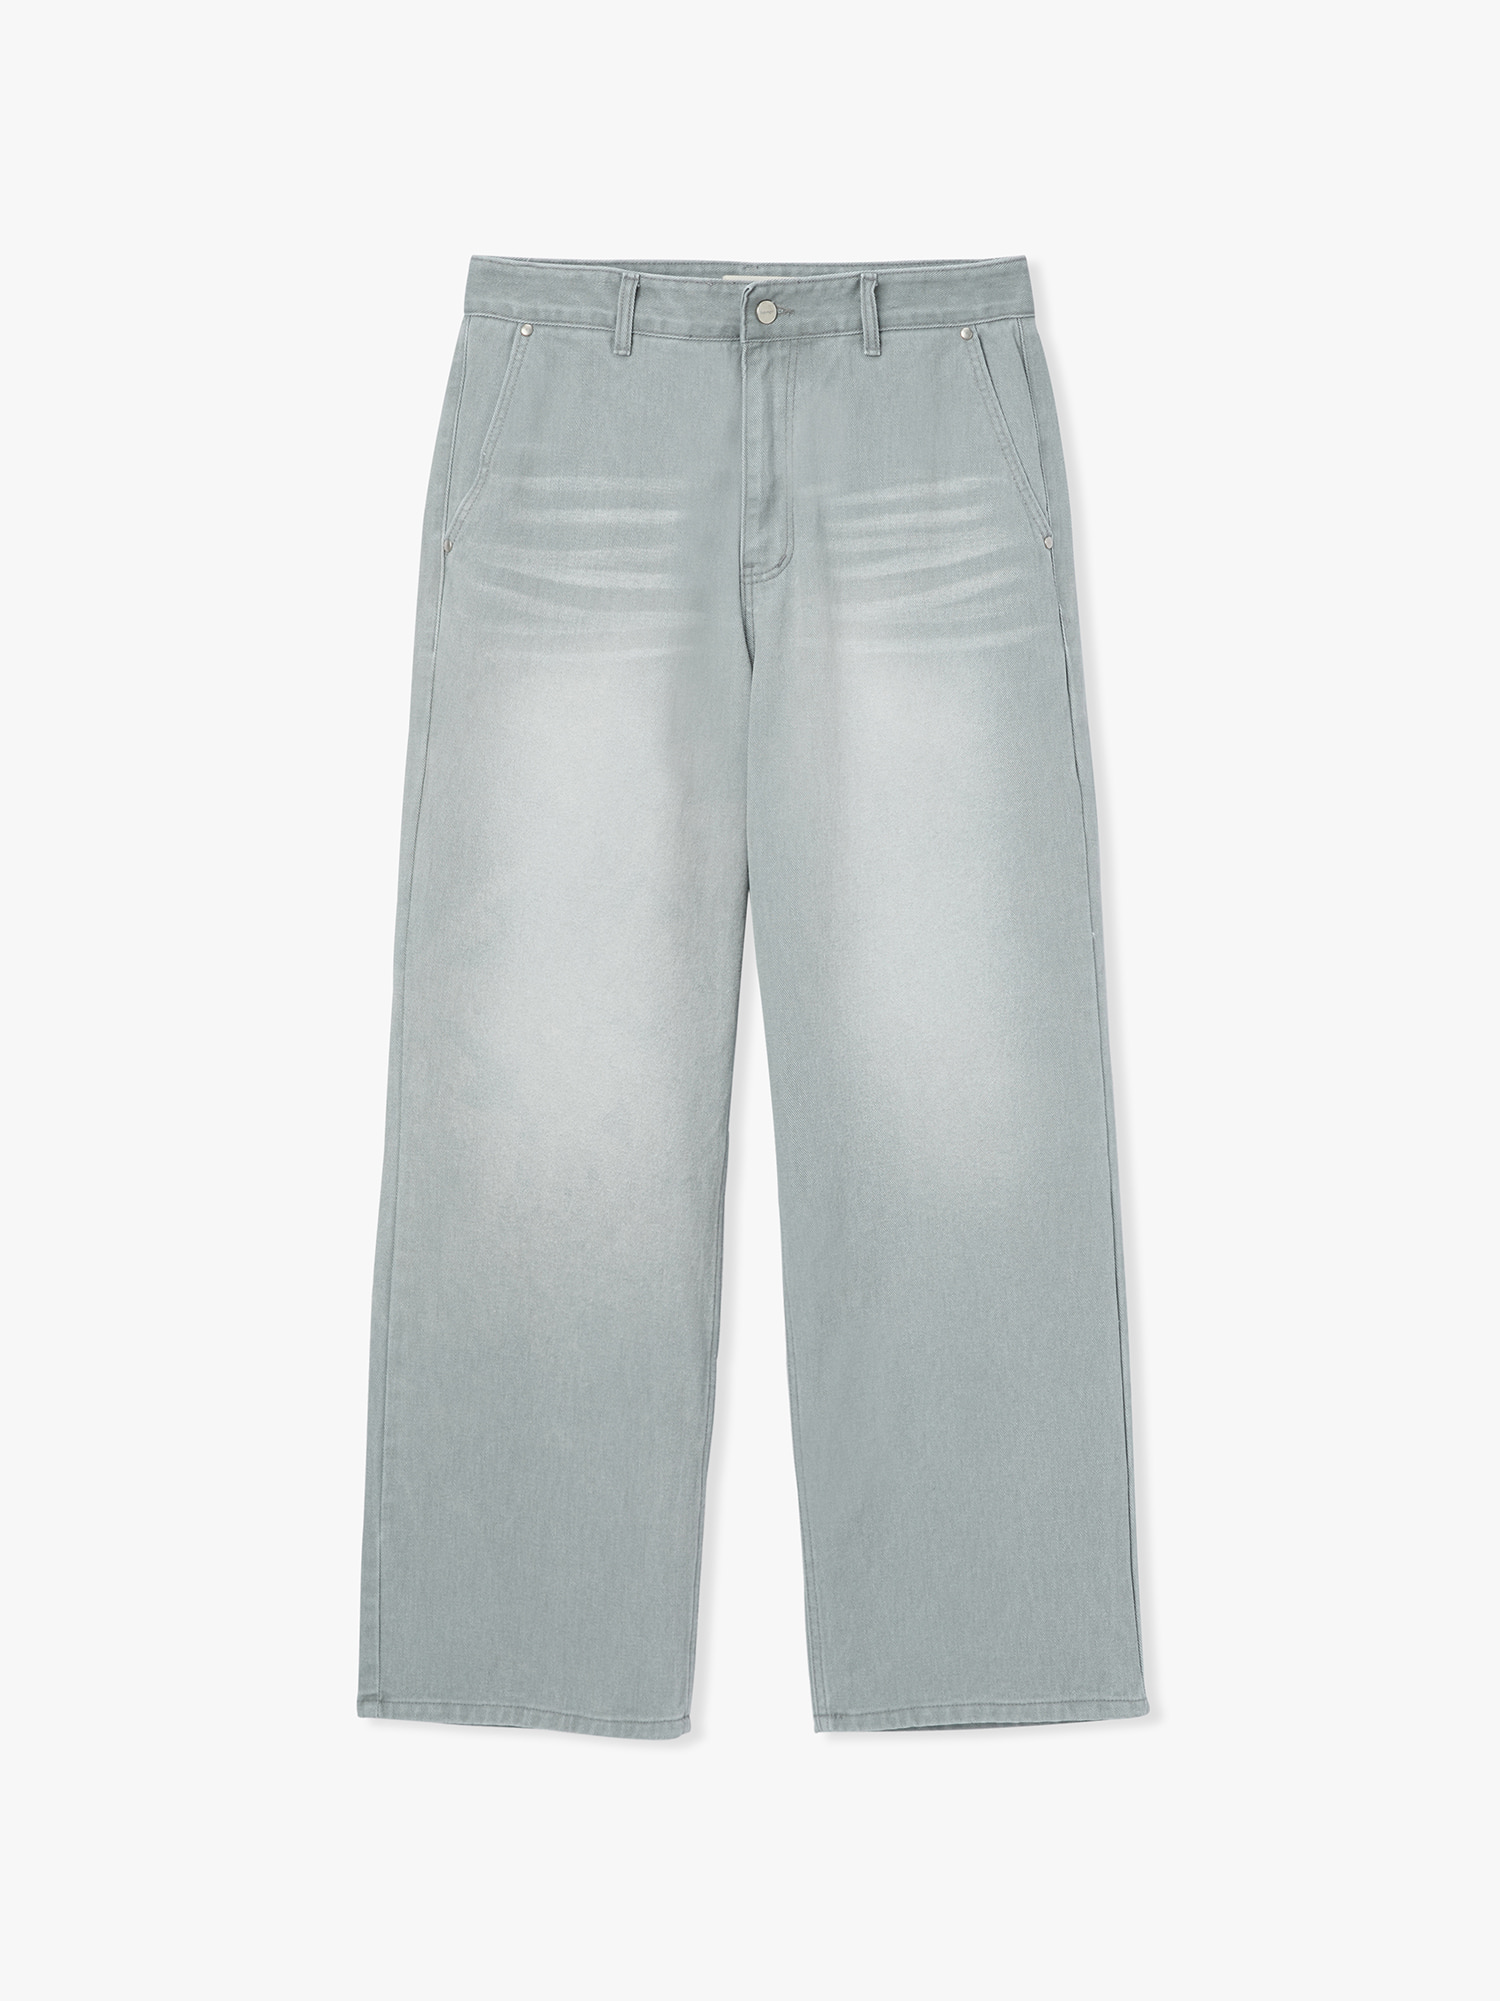 Cation Fading Denim Pants (Steel Grey)